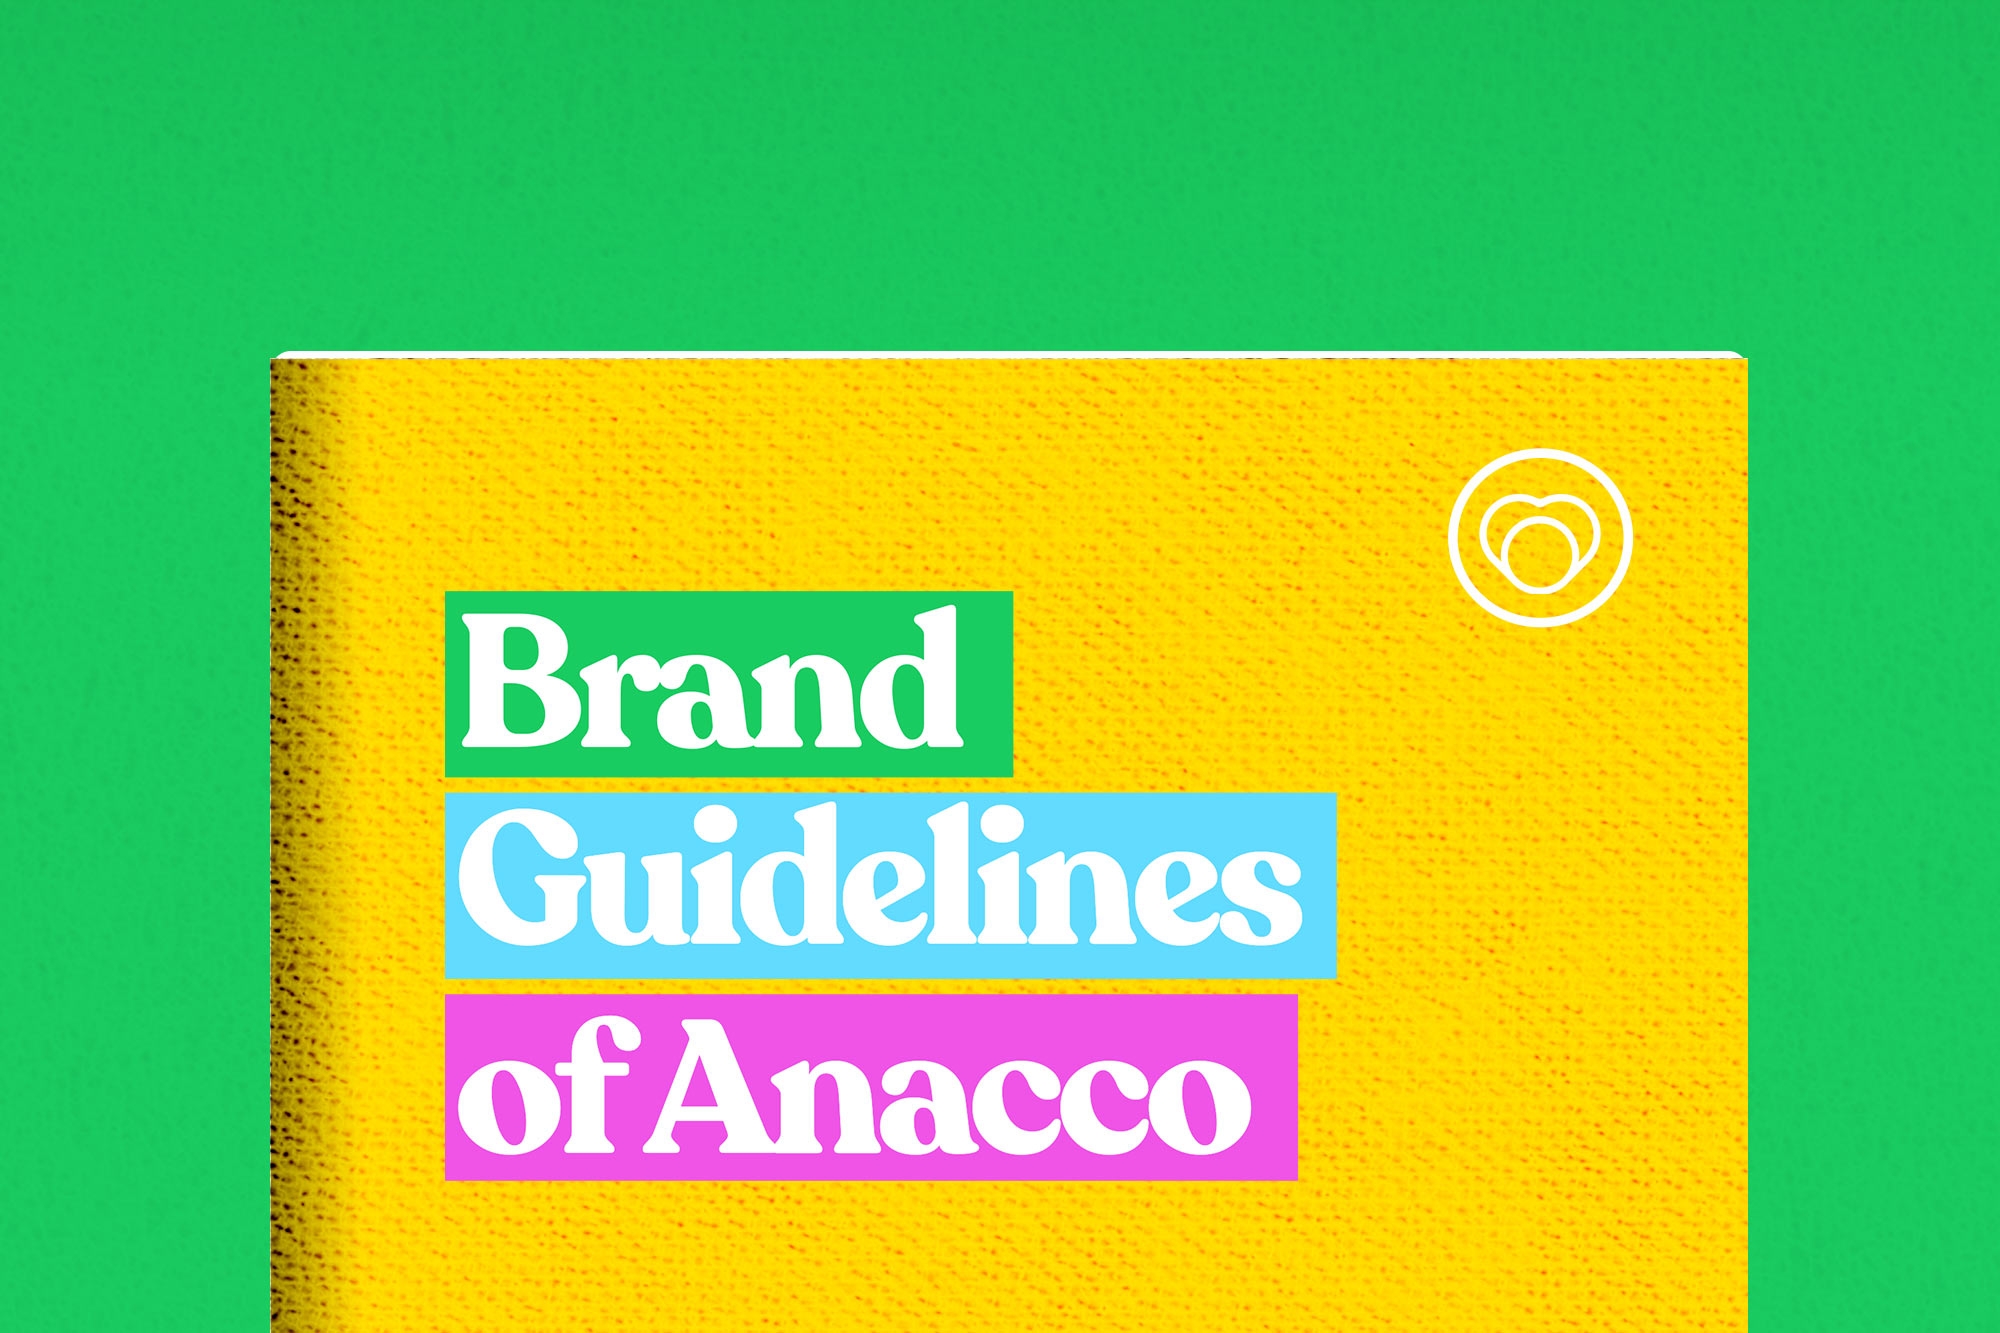 30 brand guidelines of anacco tribox design